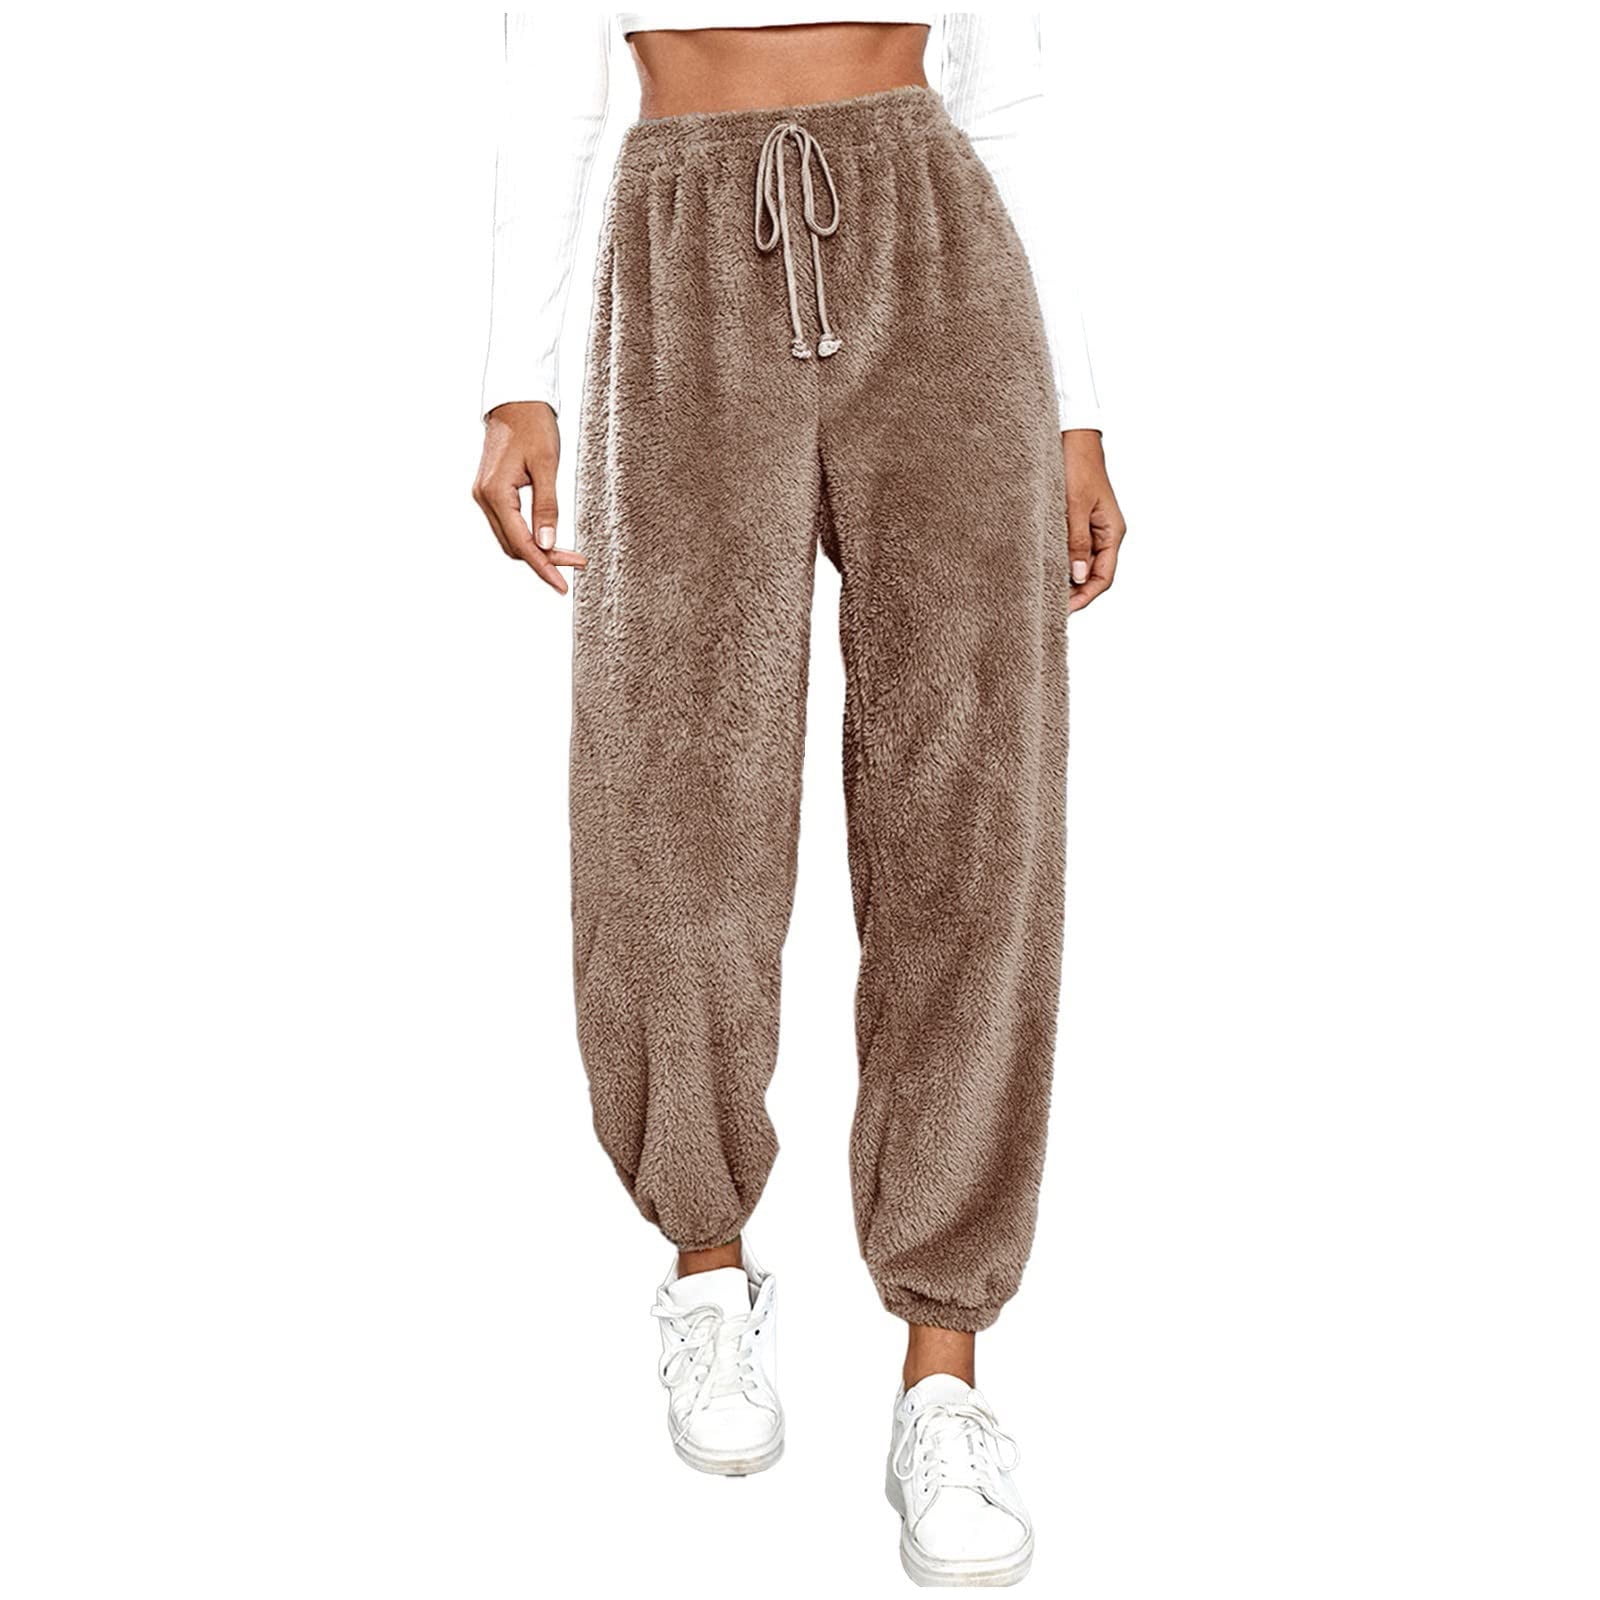 HAPIMO Sales Womens Fuzzy Fleece Pants Warm Cozy Pjs Bottoms Fleece  Sweatpants Pants Fluffy Sleepwear with Drawstring Brown XXXXXL